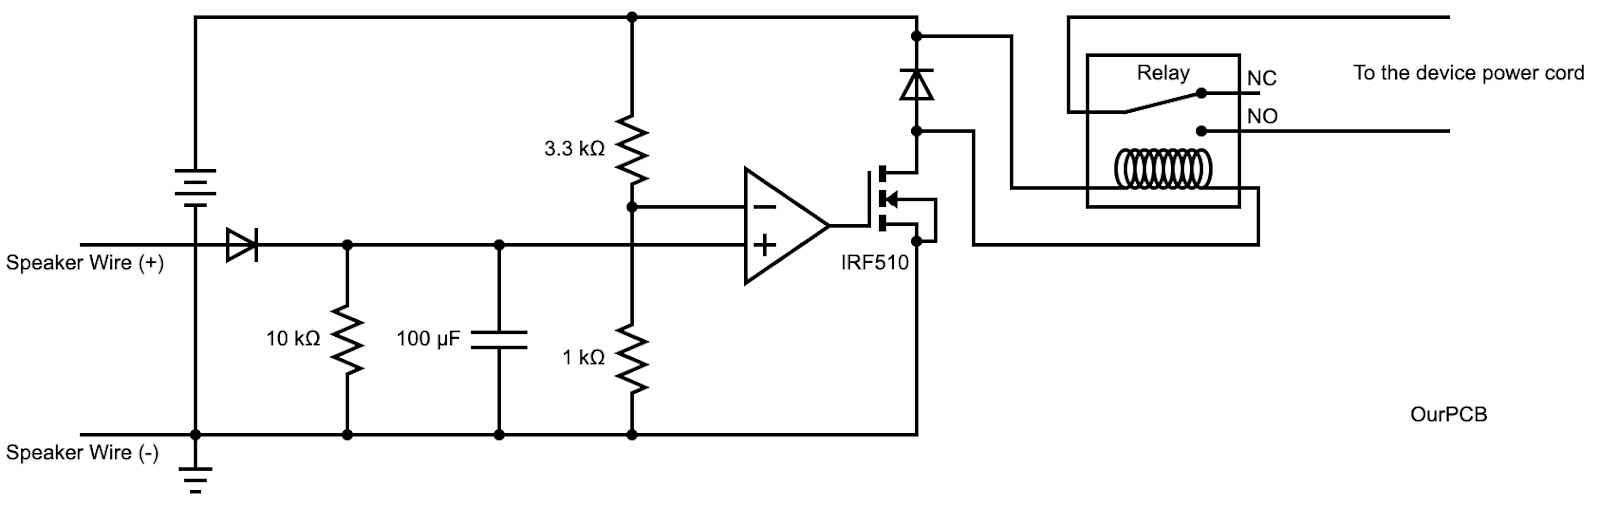 A cut-off circuit wiring diagram